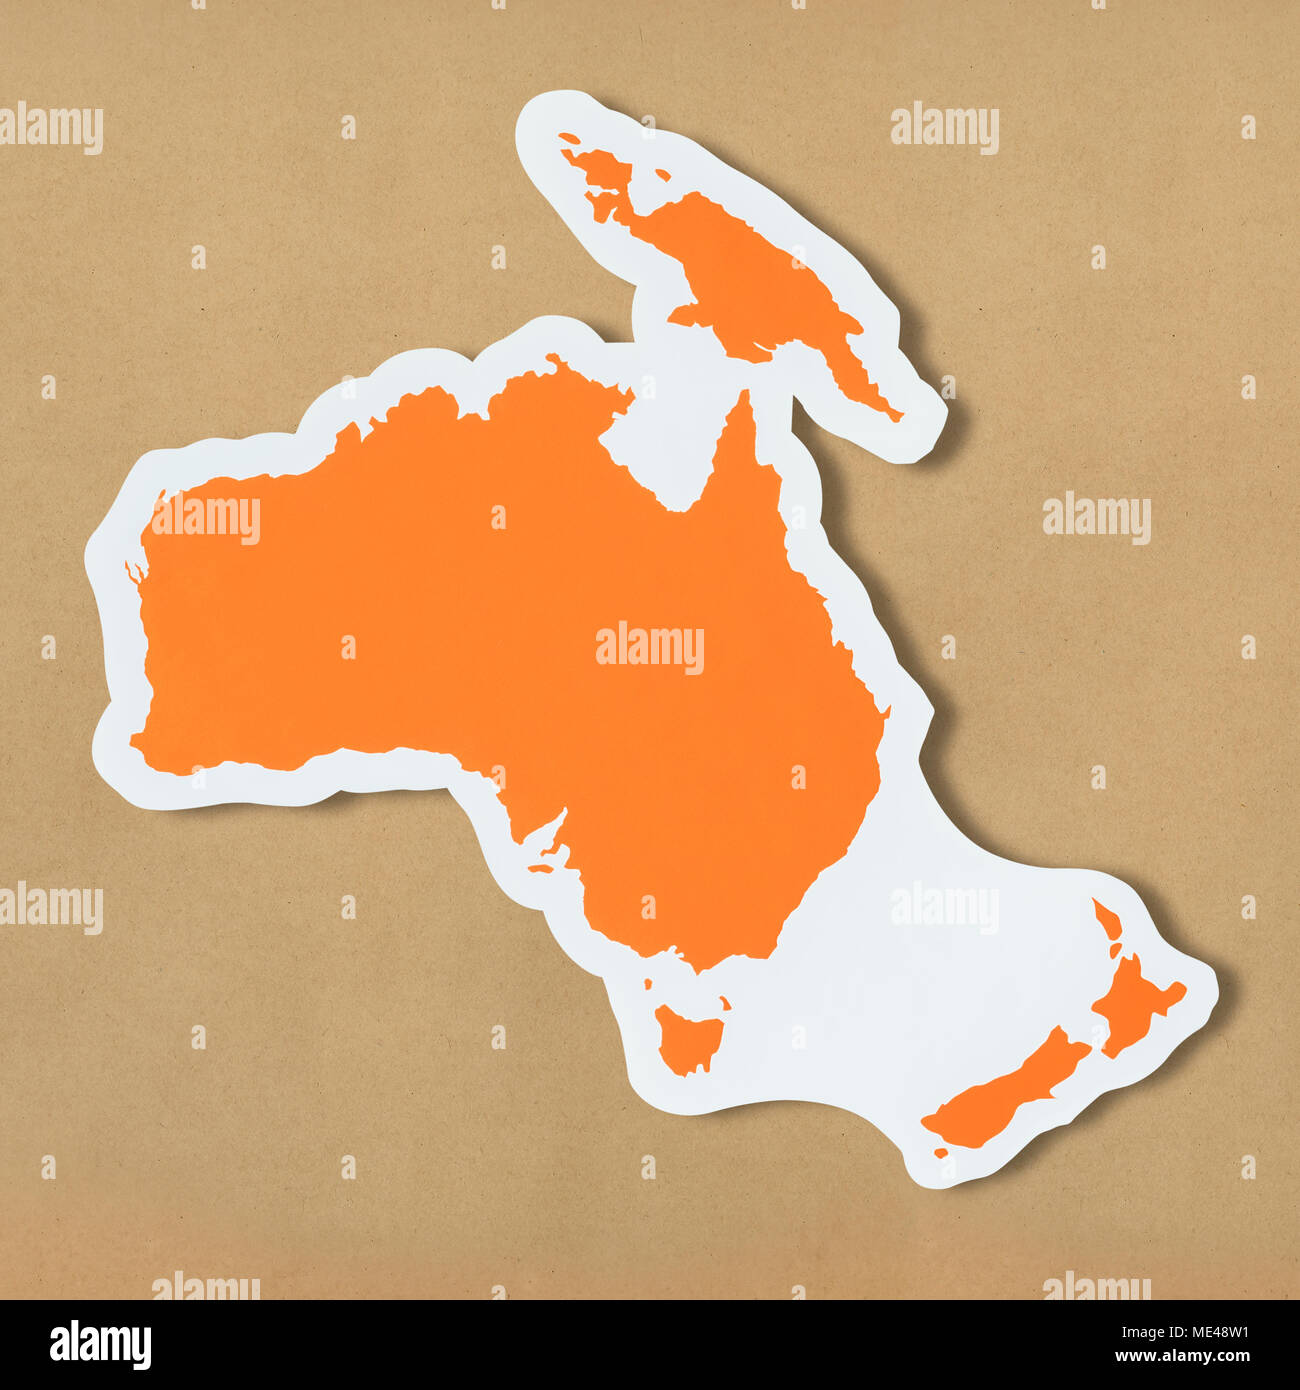 Free blank map of Australia and Oceania Stock Photo